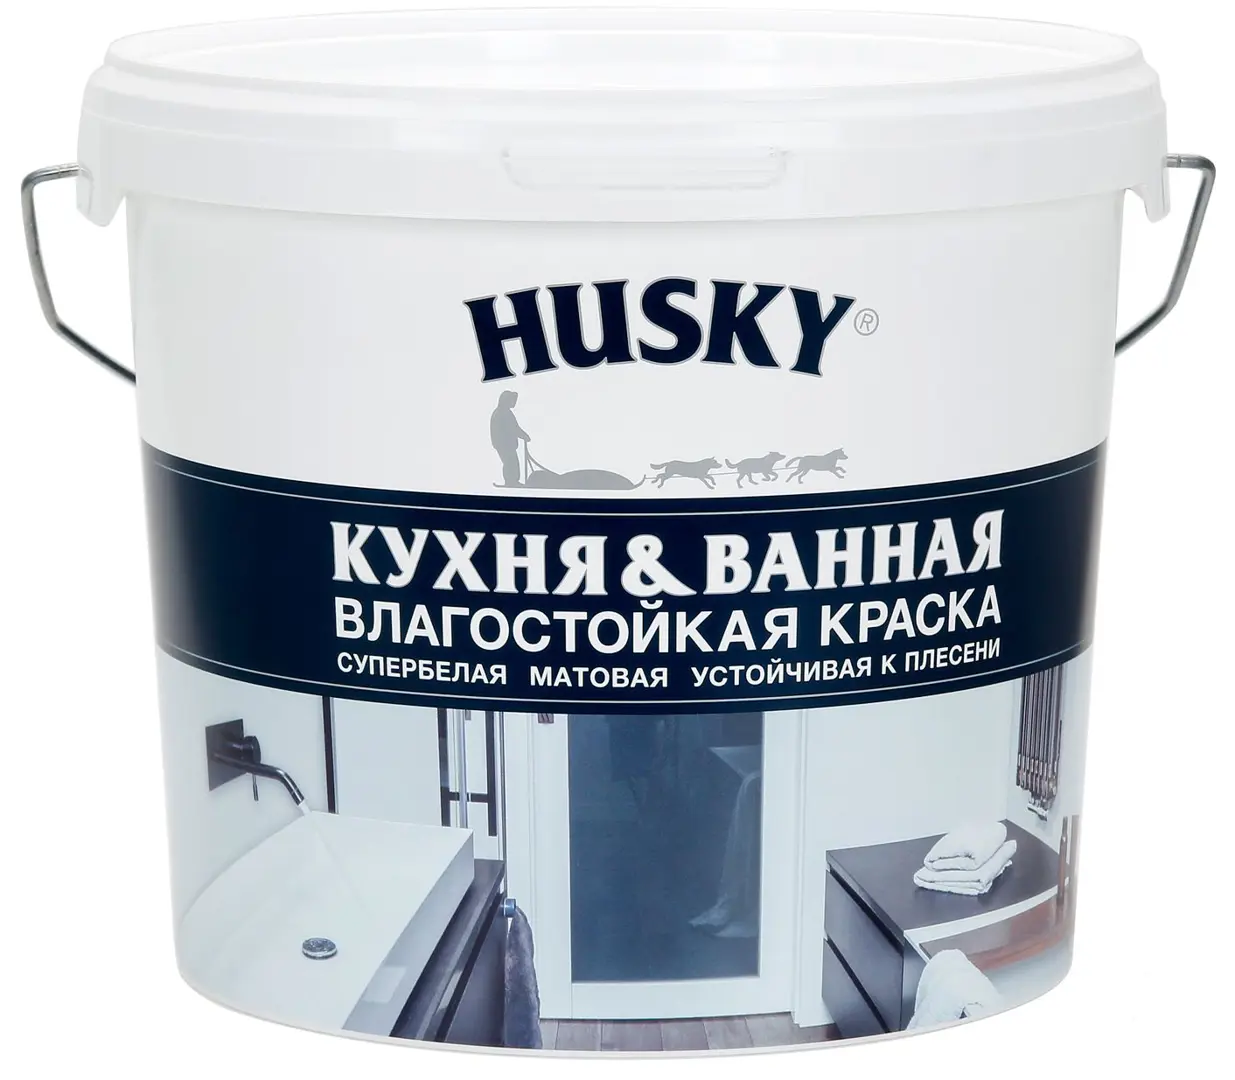 Краска для кухонь и ванных комнат Husky 5 л краска вд white house для кухонь и ванн моющаяся супербелая 7 кг